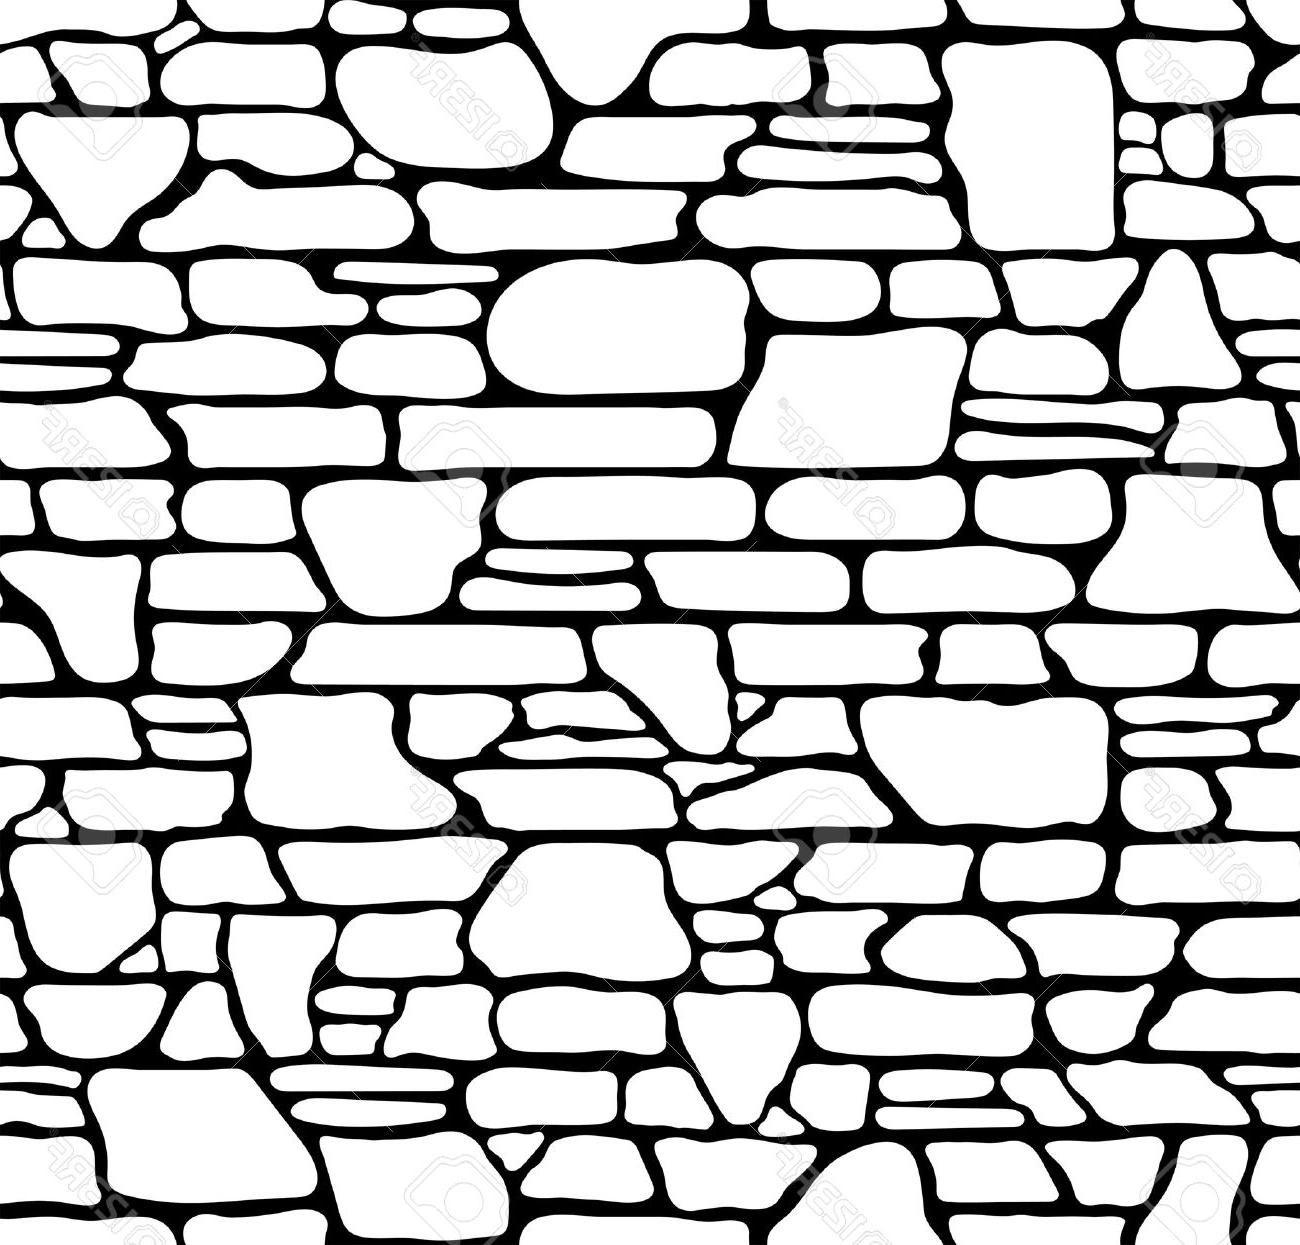 Brick Wall Texture Stone Texture Drawing រ បភ ពប ល ក Images